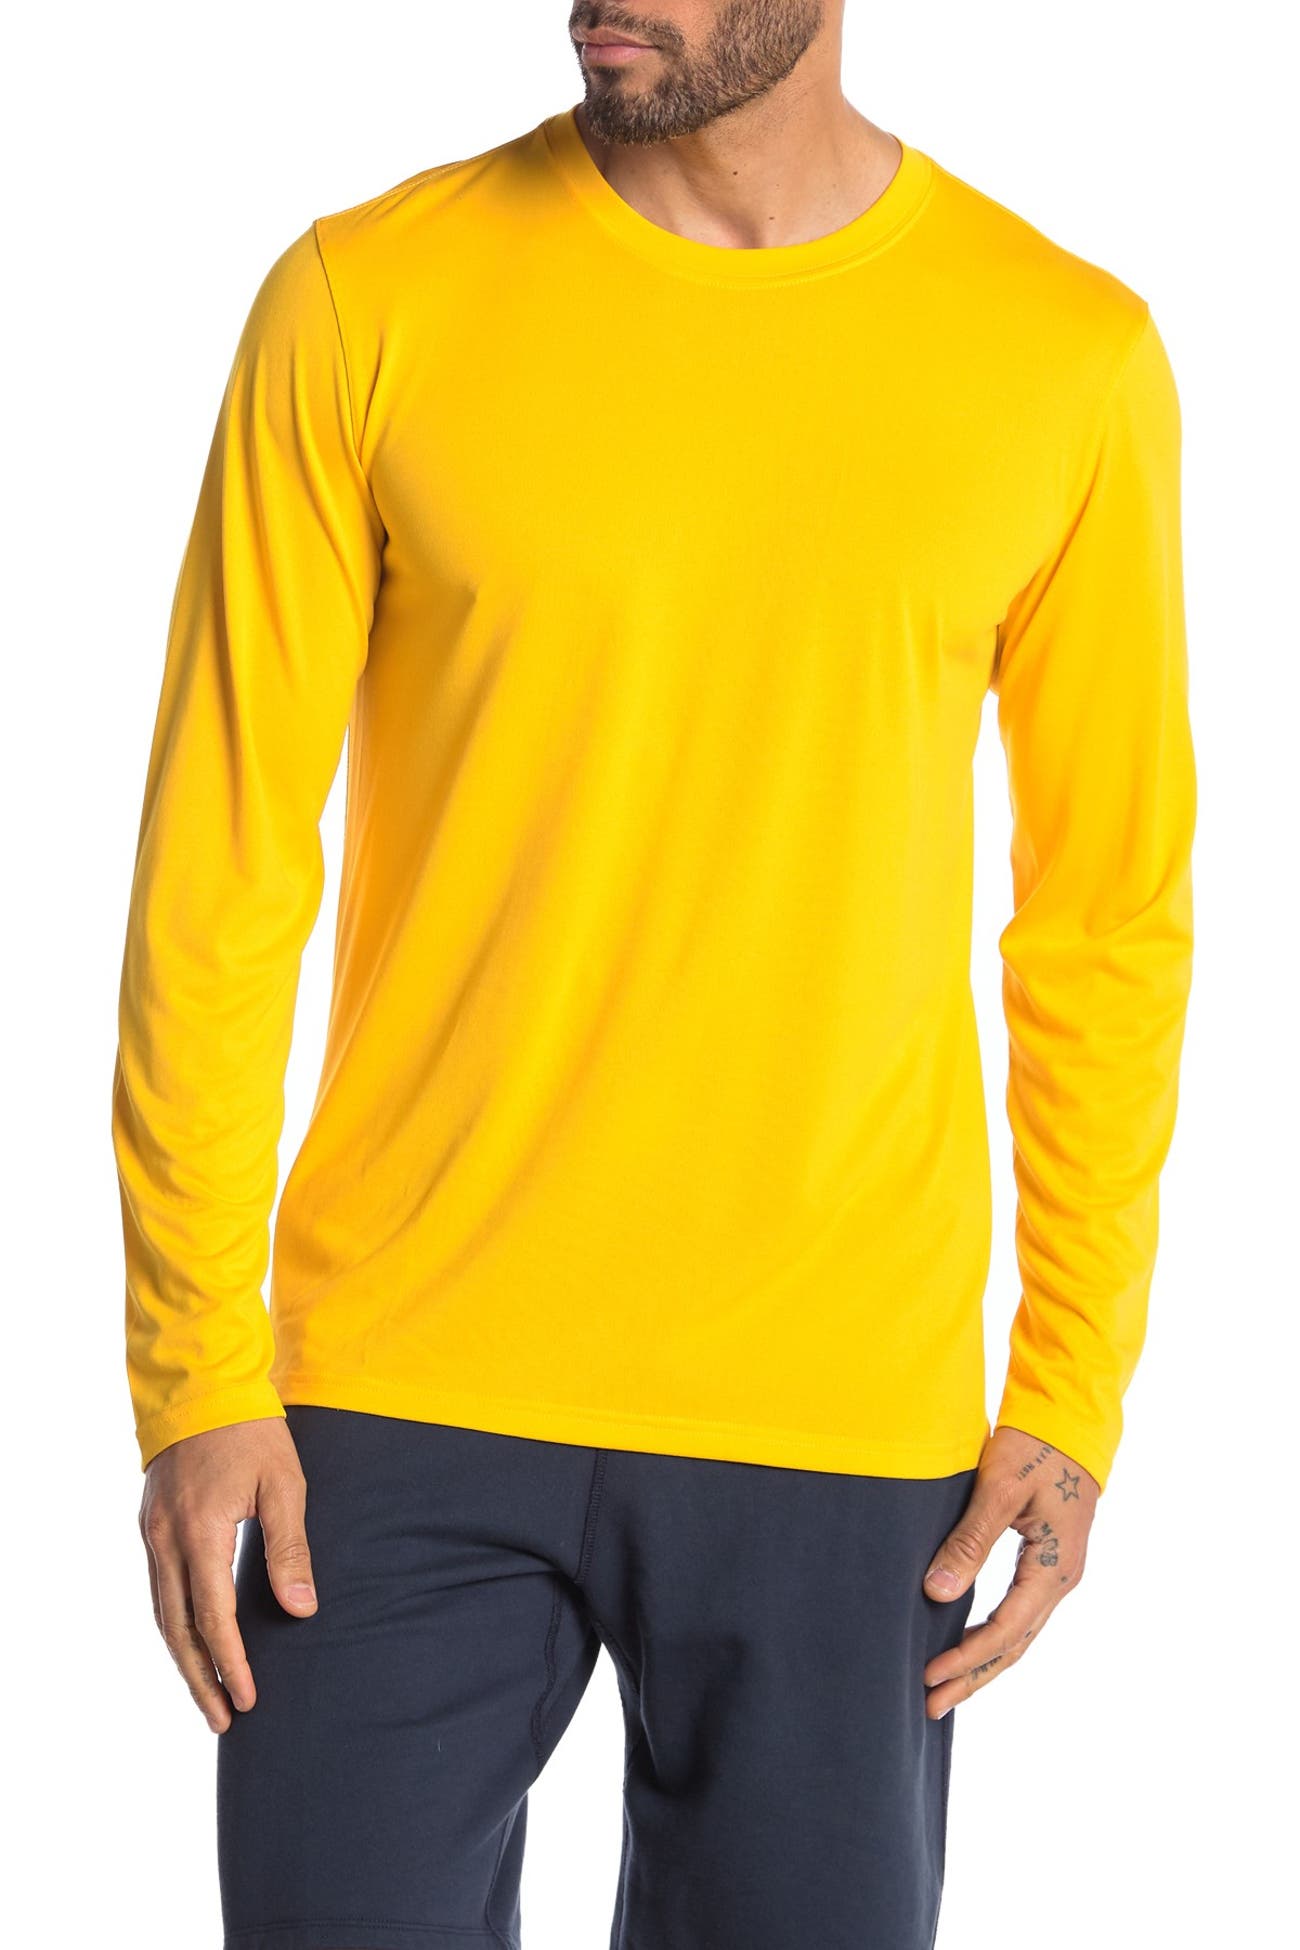 Nike | Legends 2.0 Long Sleeve T-Shirt | Nordstrom Rack